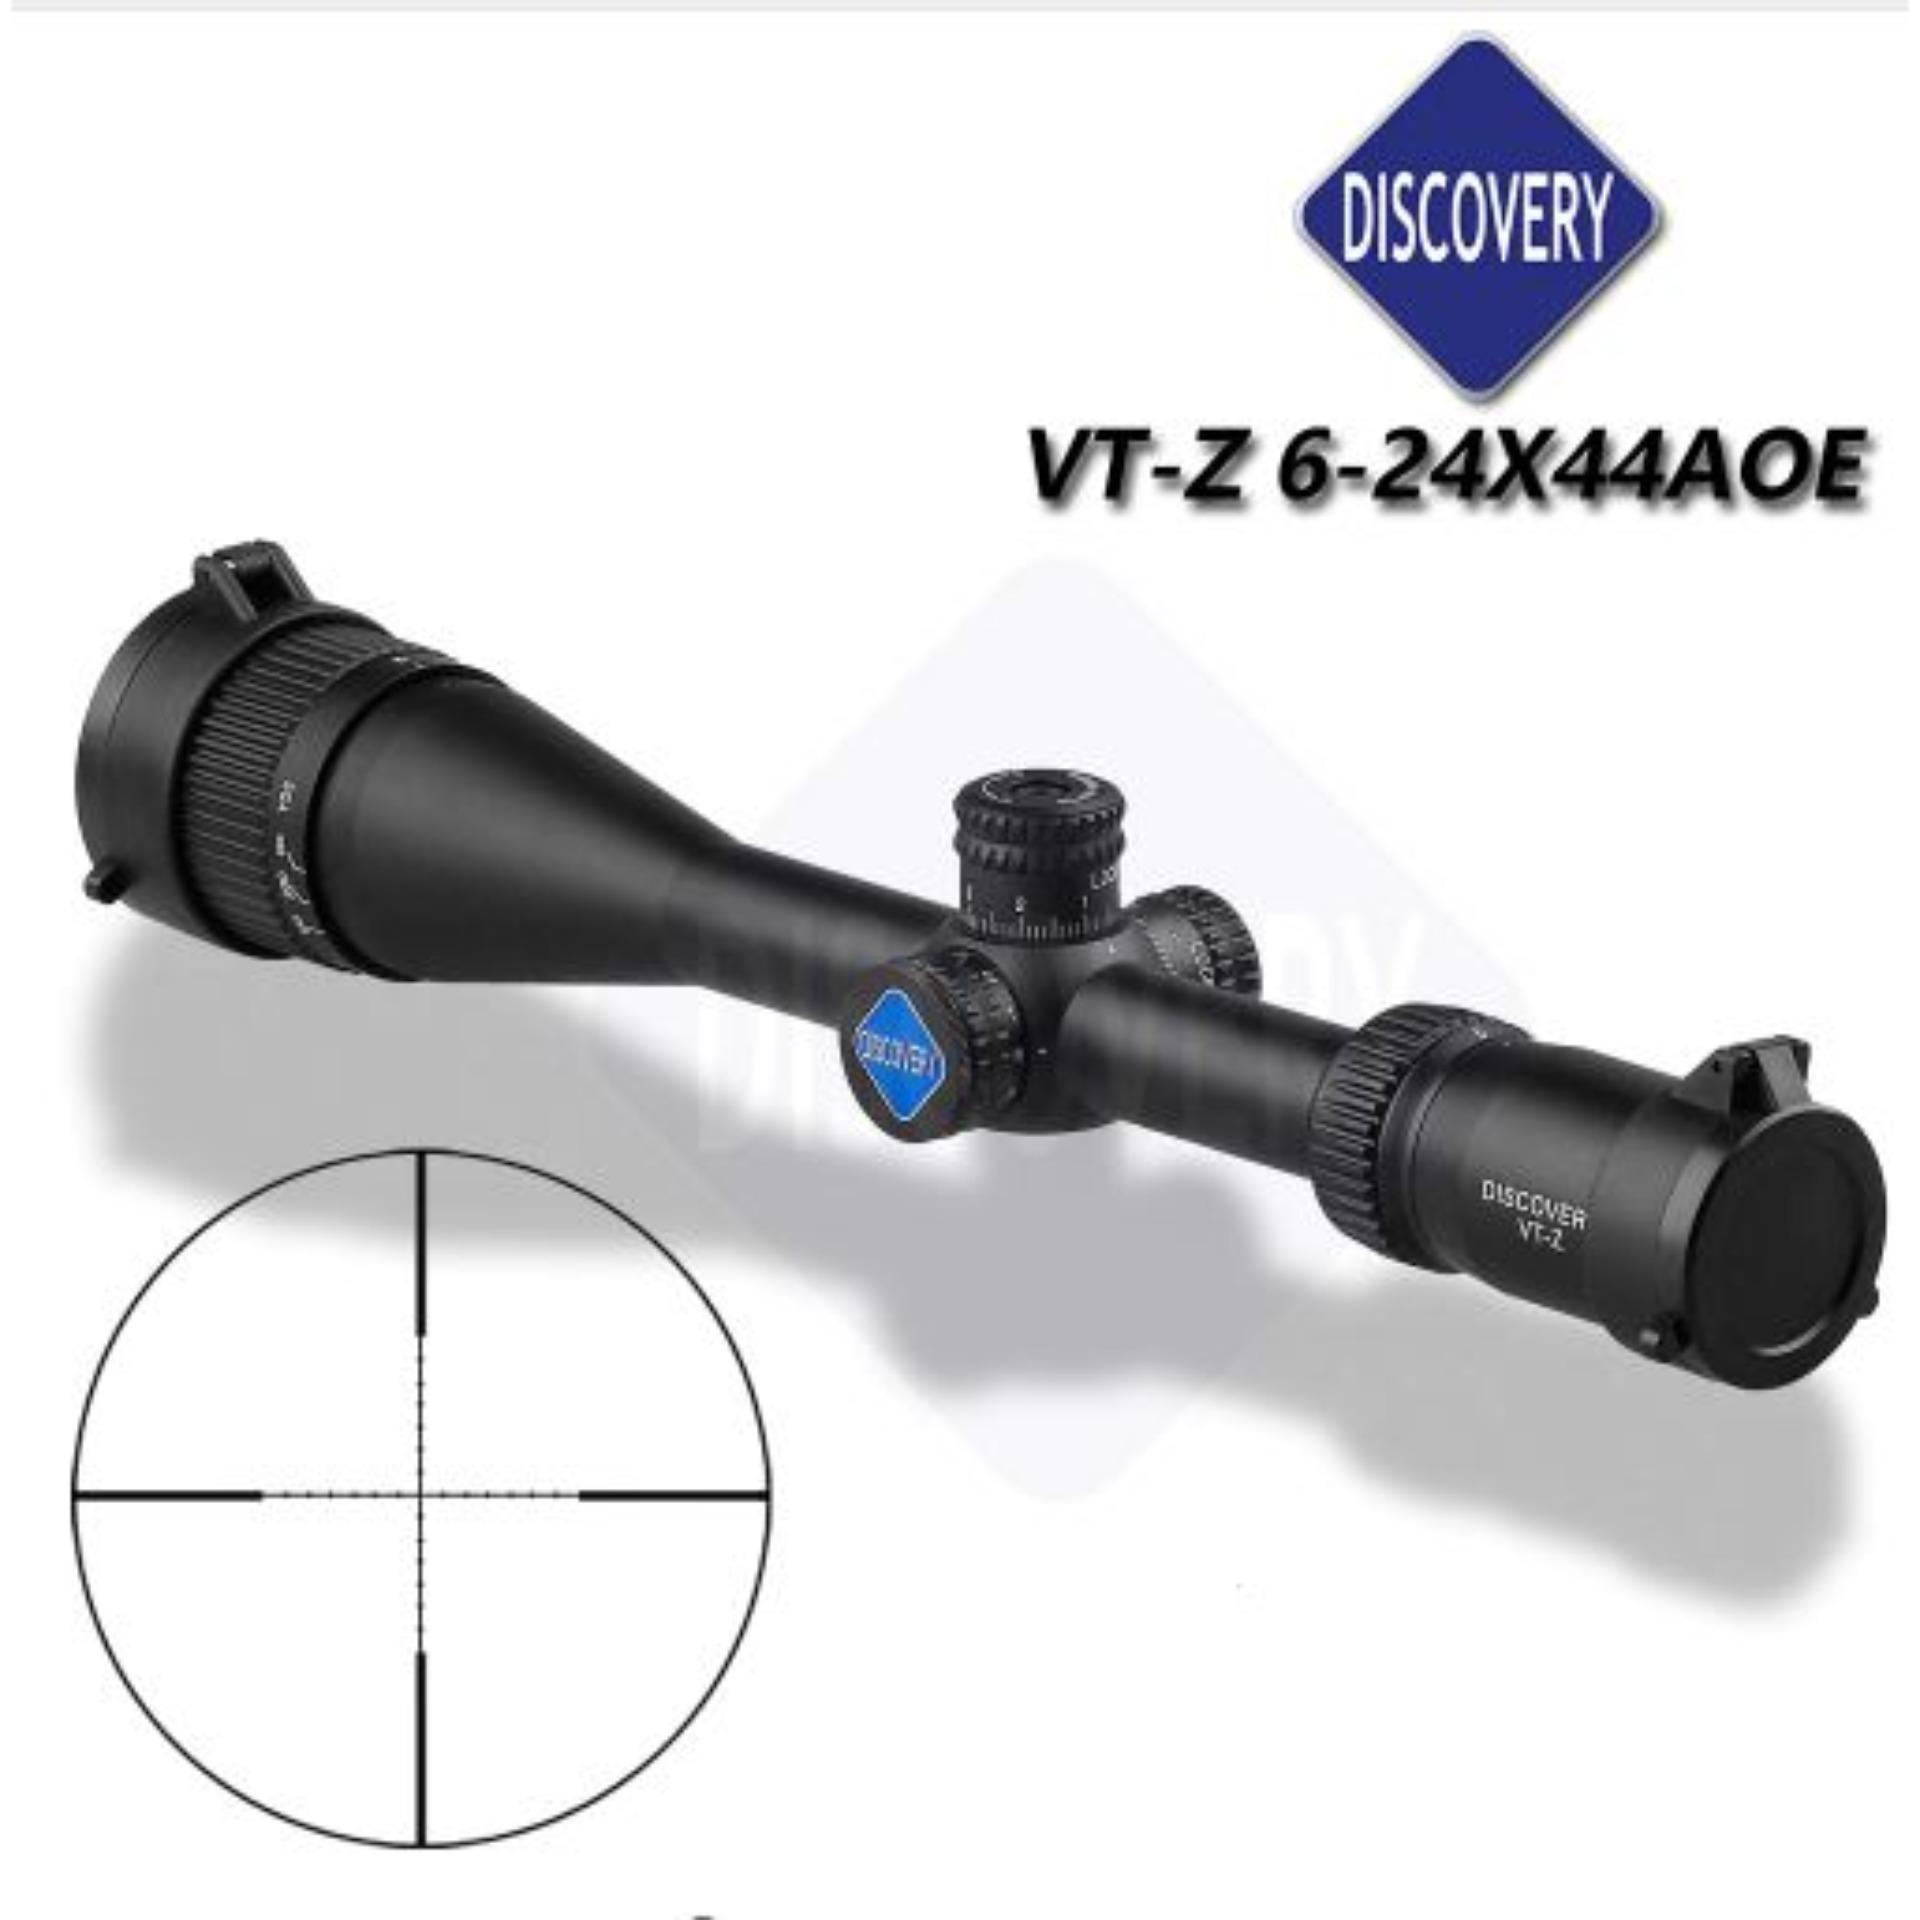 DISCOVERY VT-Z 6-24x44AOE Shock Proof Illuminated Hunting Rifle Scope Sight